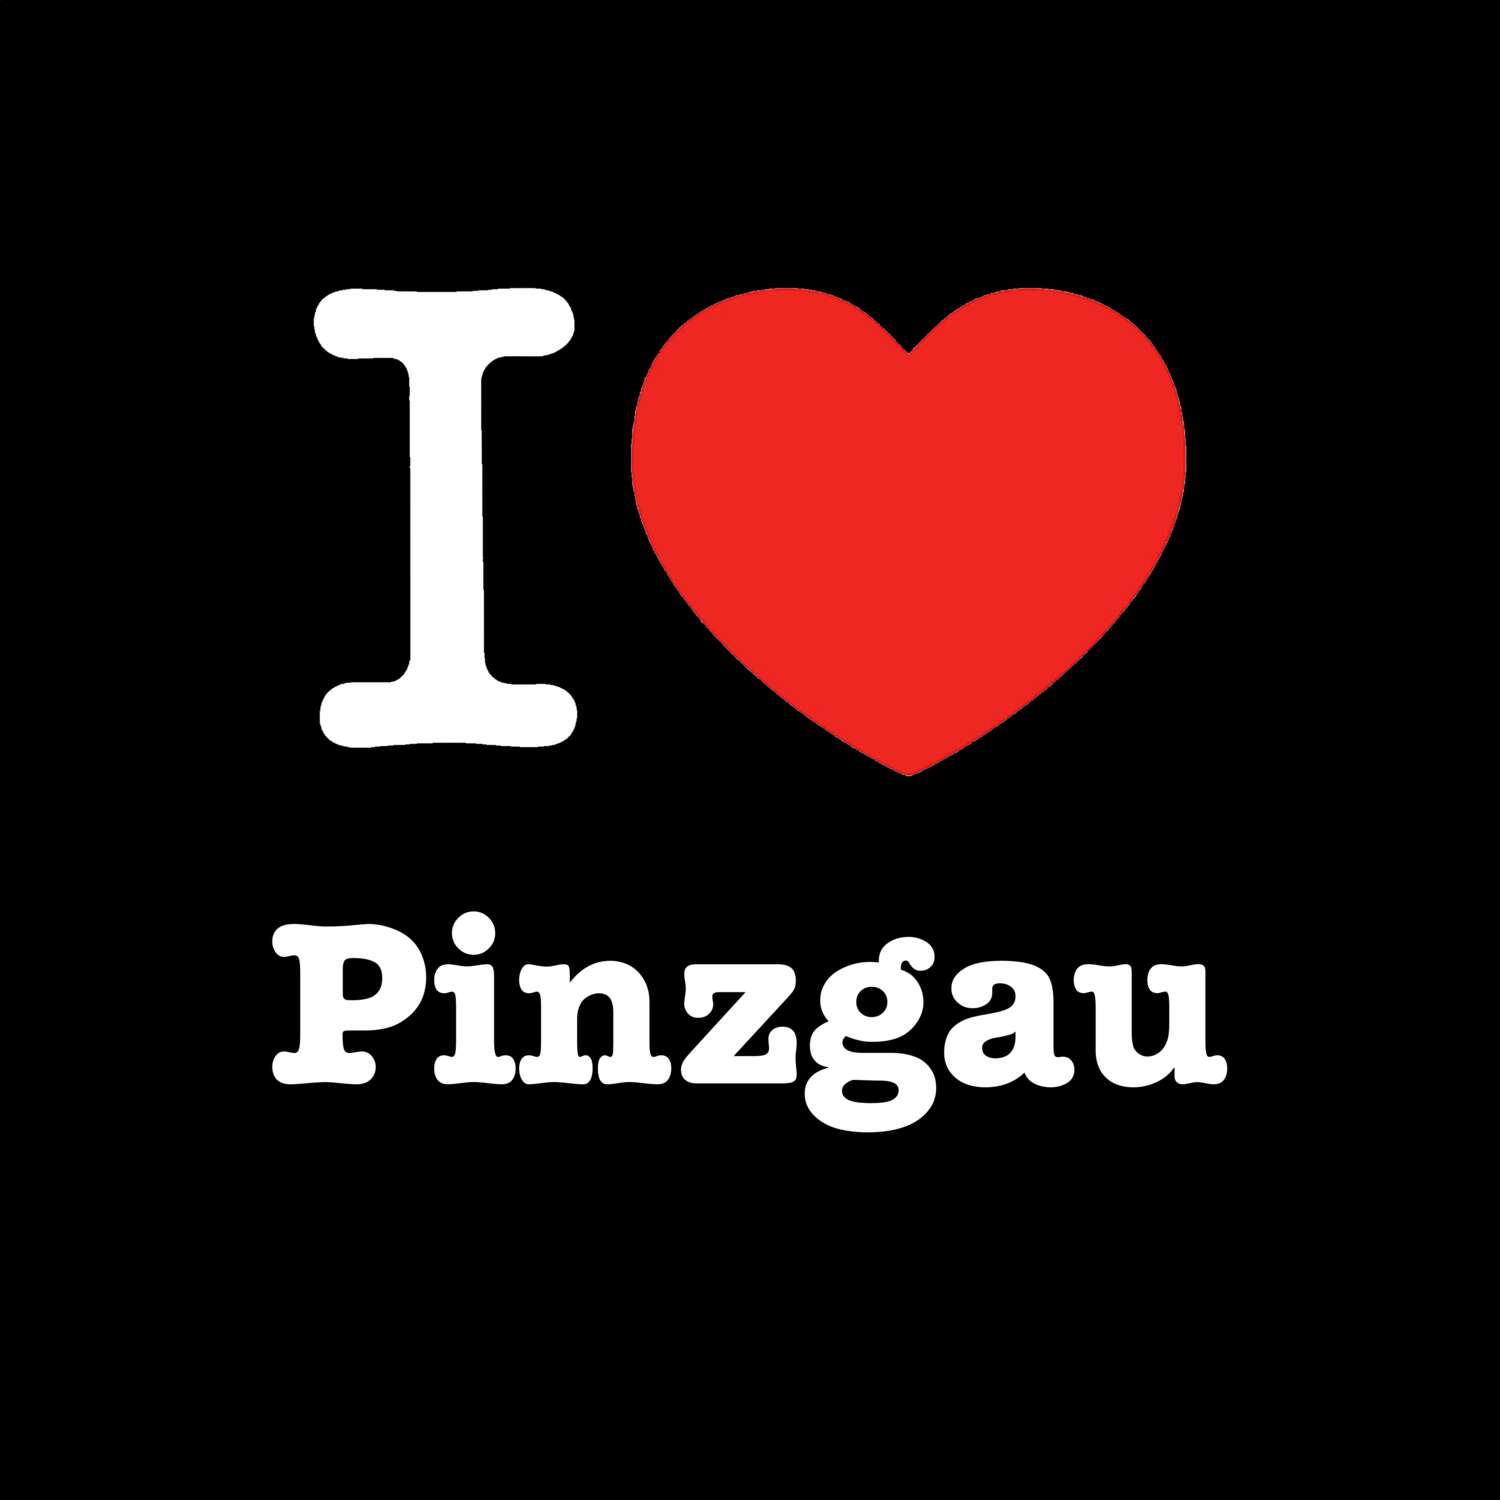 Pinzgau T-Shirt »I love«